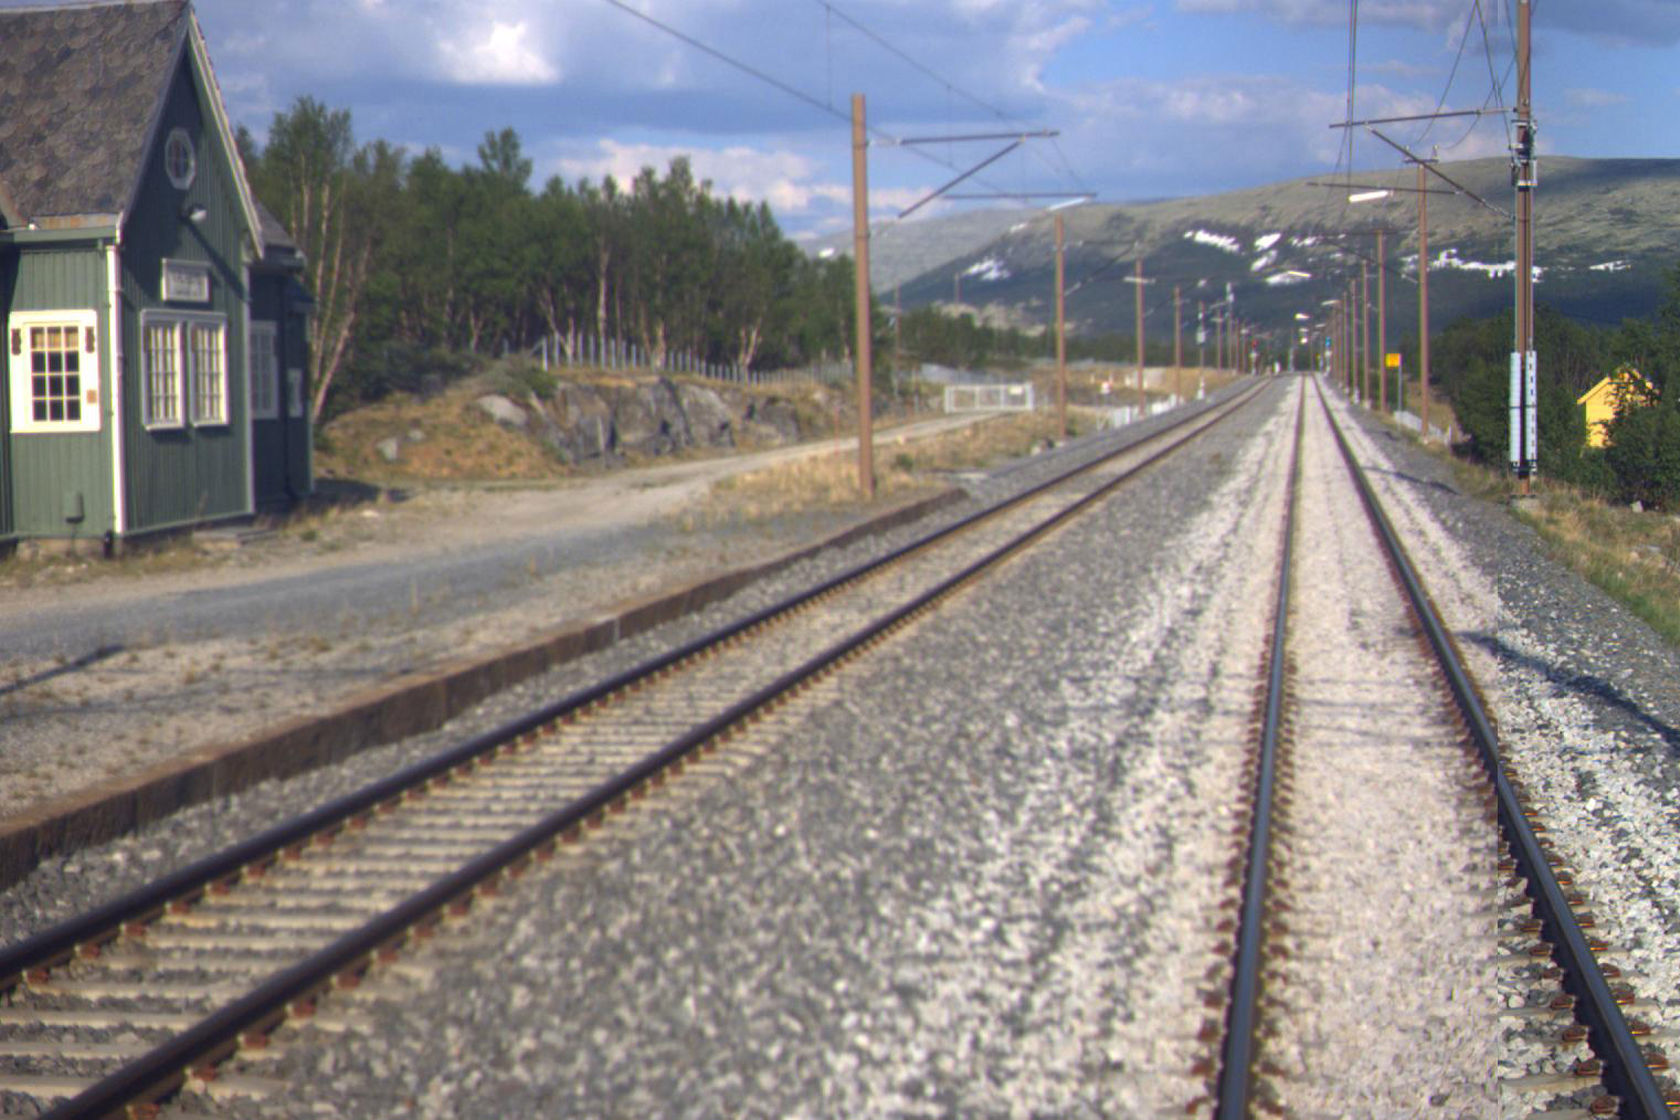 Tracks and station building at Vålåsjø station